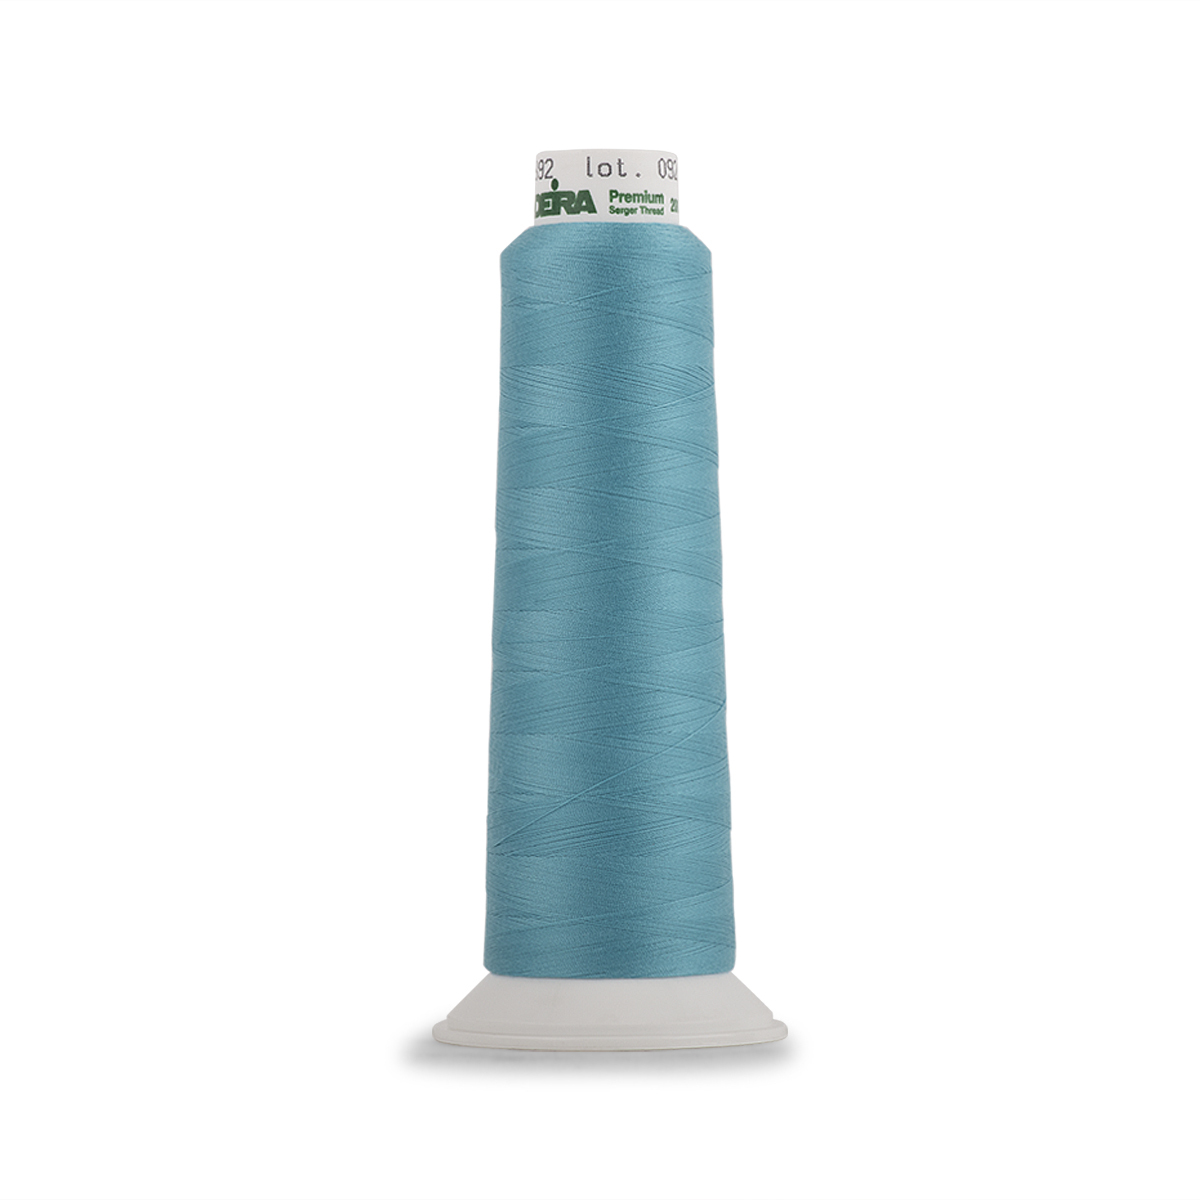 Aerolock Regular Serger Spun Polyester Thread - Tex 27 - 2,000 yds. -  Cleaner's Supply